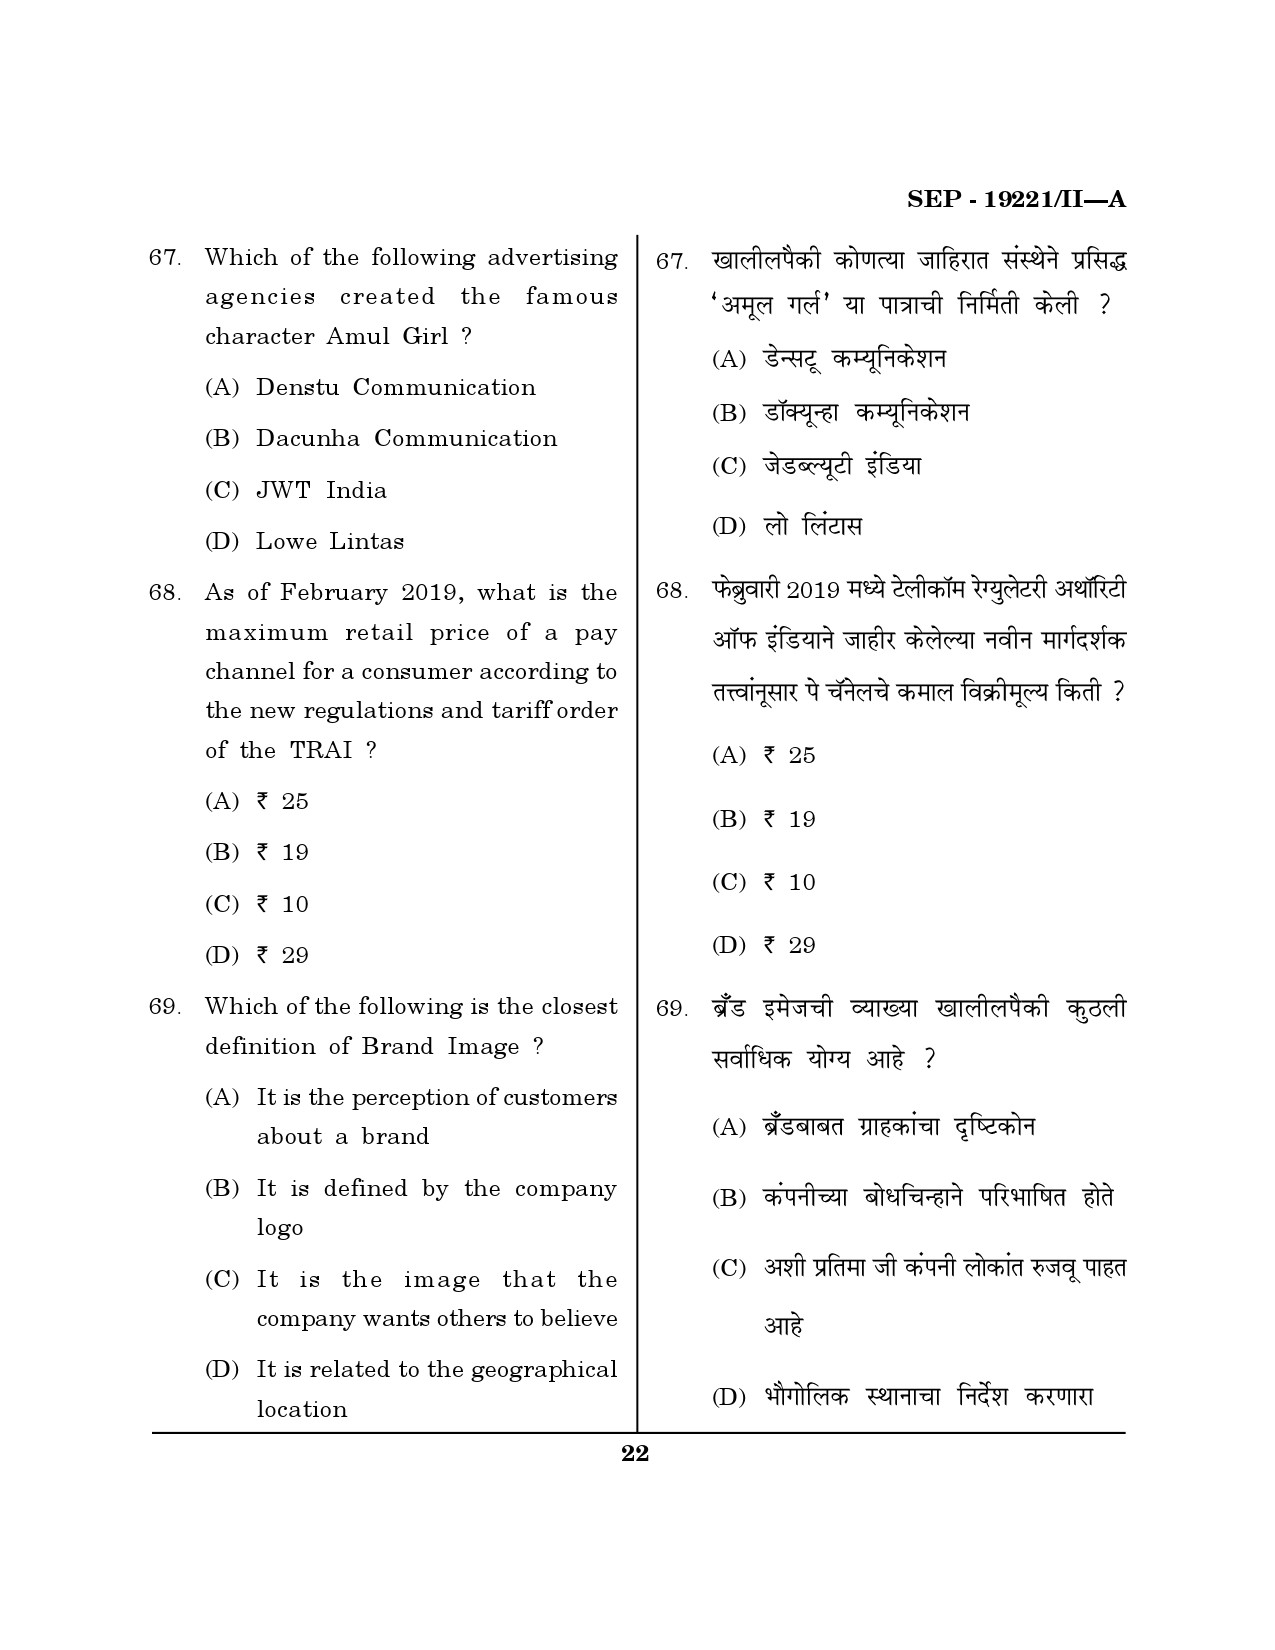 Maharashtra SET Journalism and Mass Communication Exam Question Paper September 2021 21